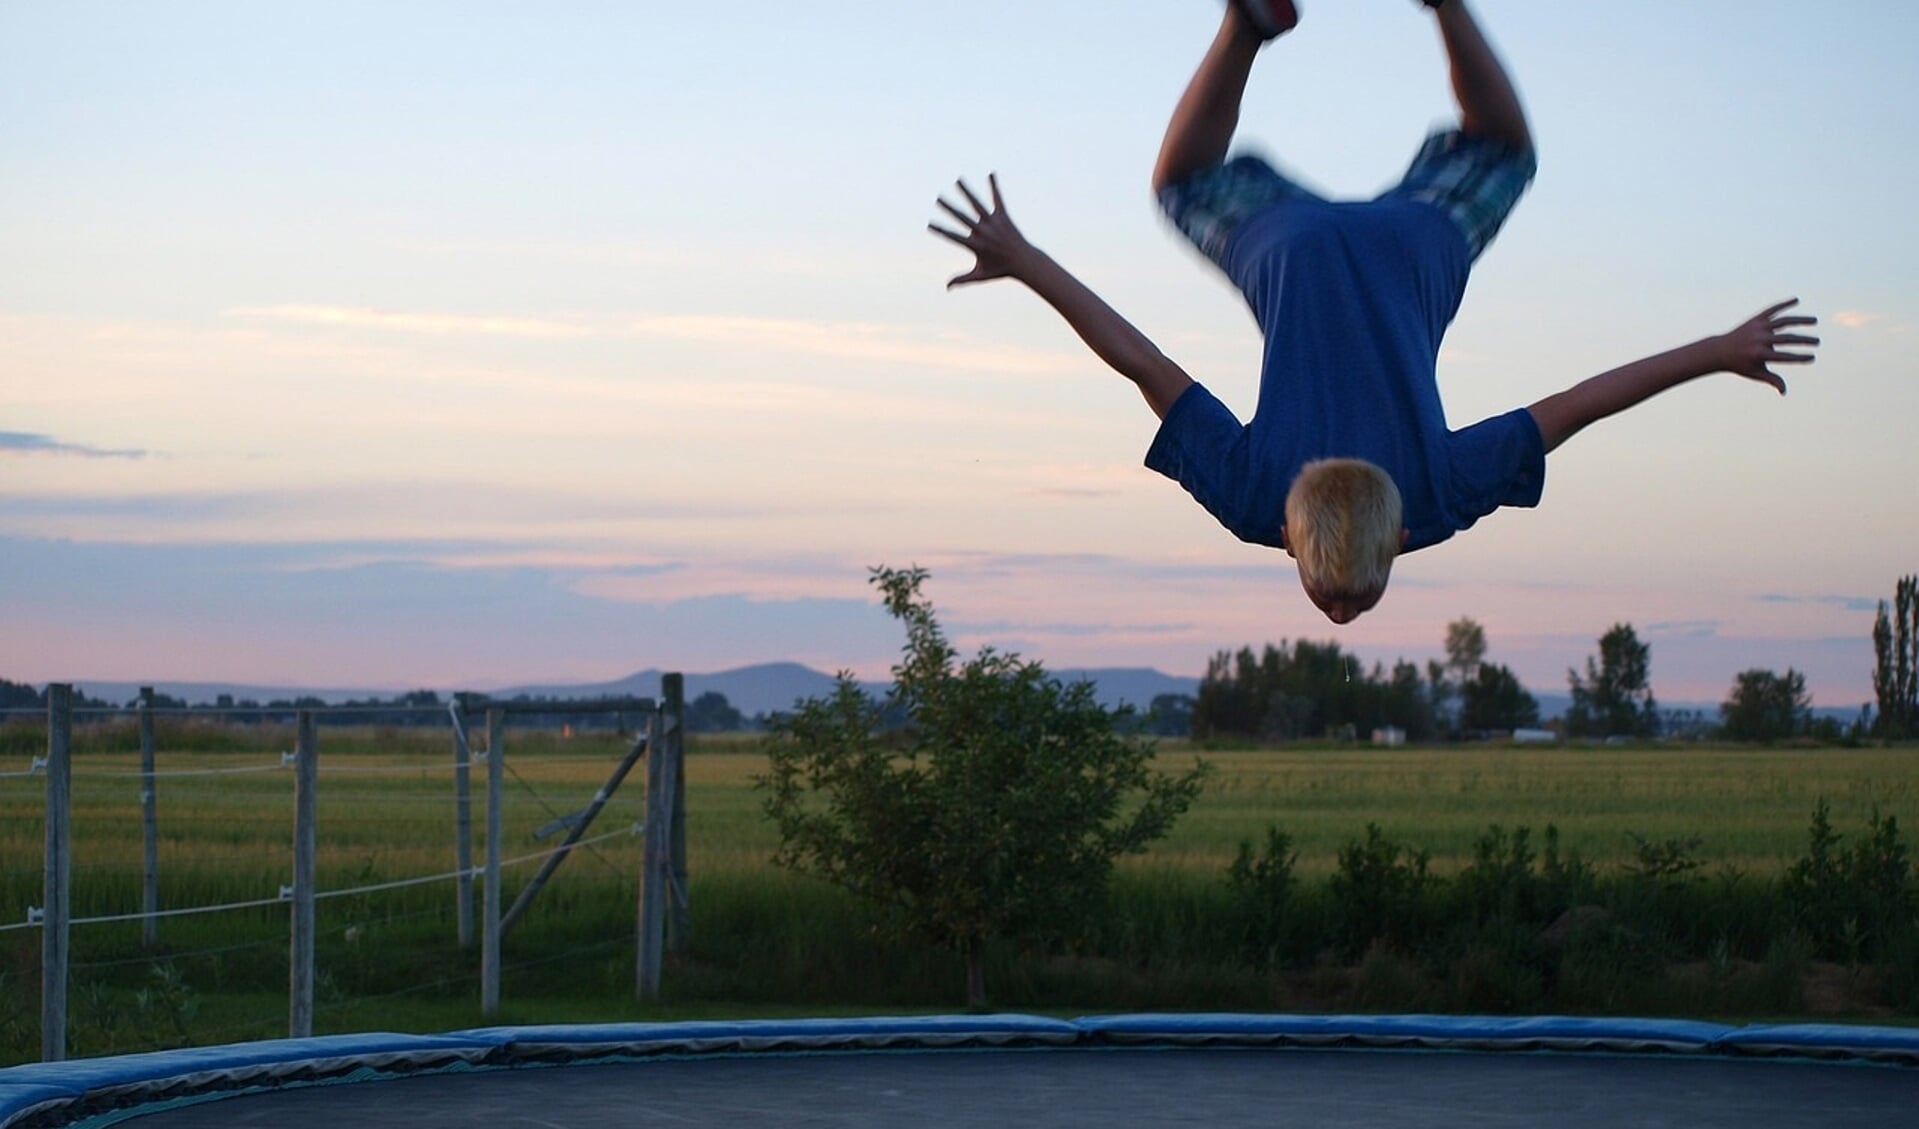 https://pixabay.com/photos/trampoline-trick-jumping-boy-salto-71548/